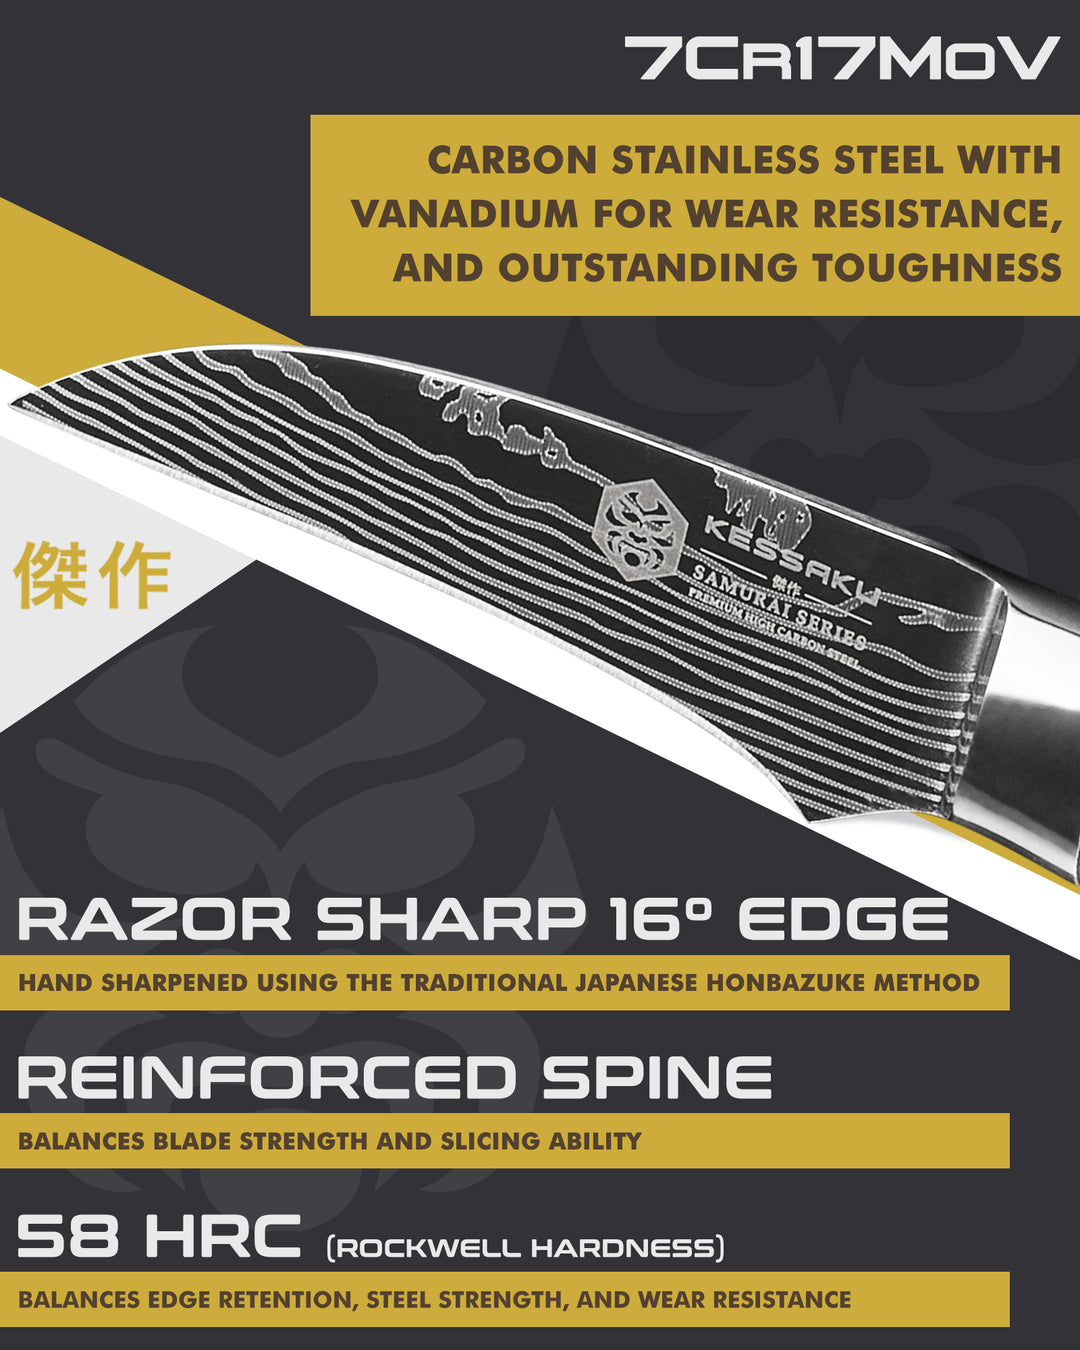 Kessaku Samurai Tourne Knife blade features: 7Cr17MoV steel, 58 HRC, 16 degree edge, reinforced spine